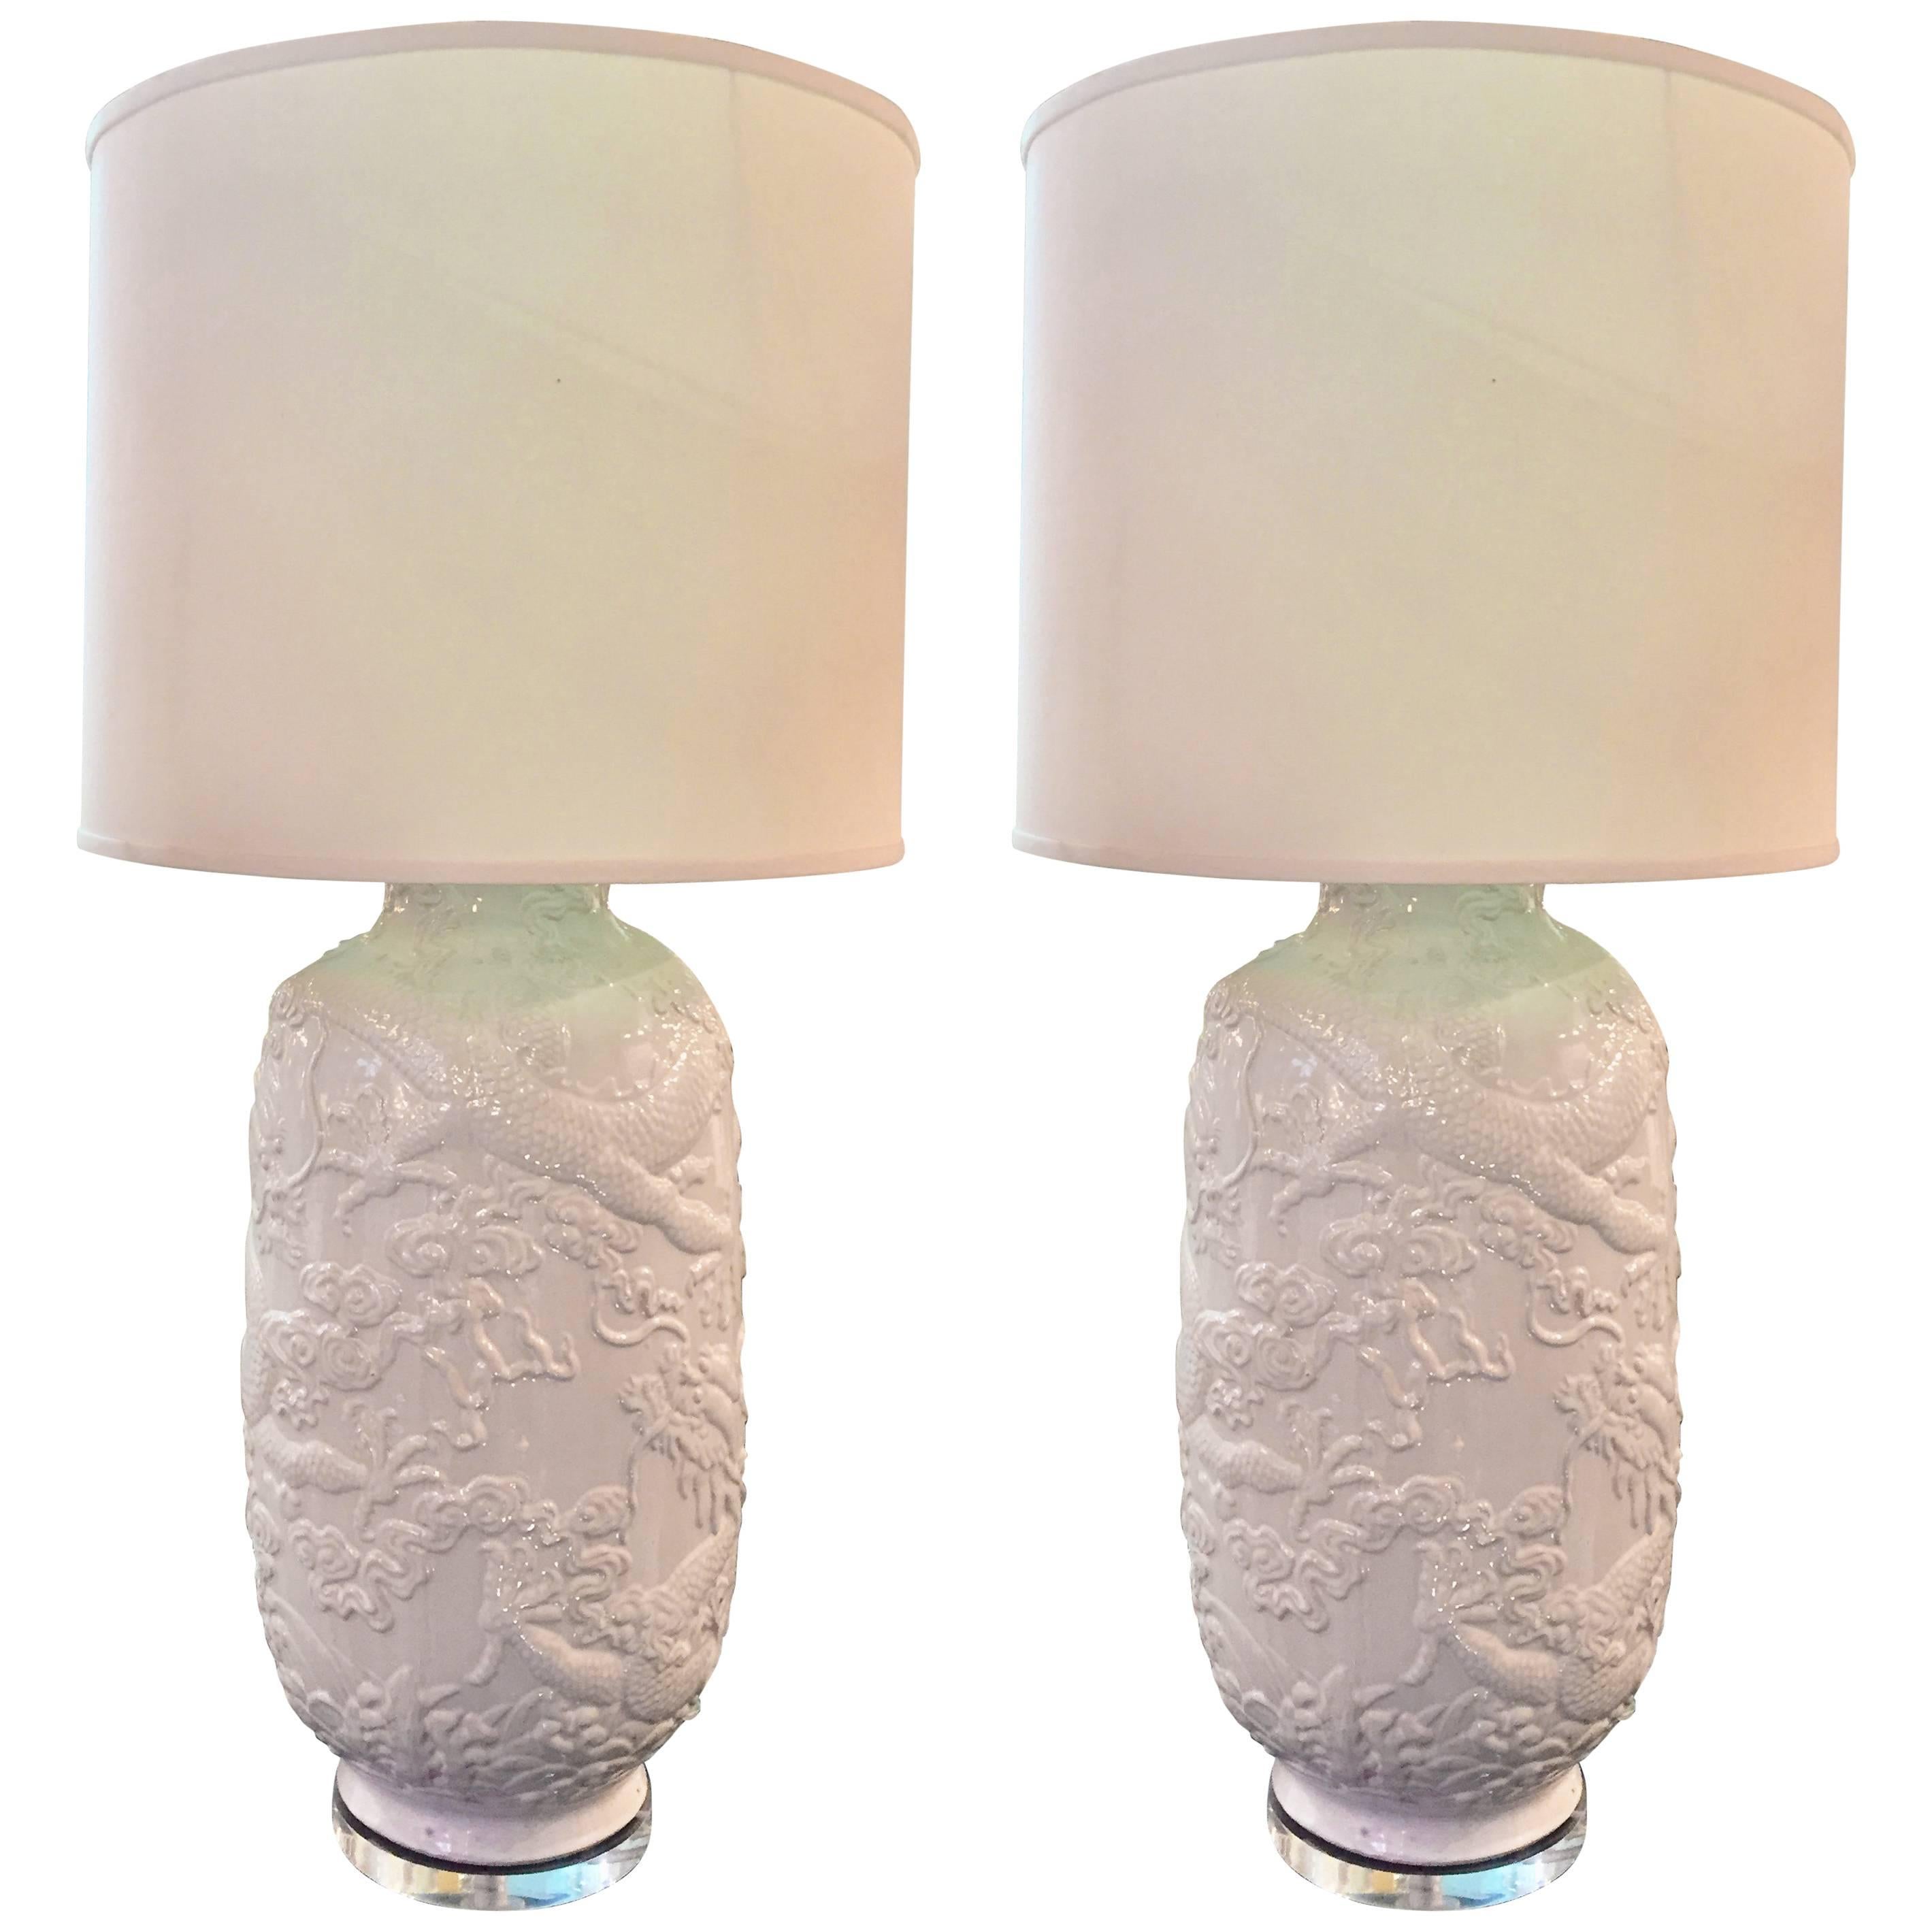 Pair of Asian White Ceramic Lamps